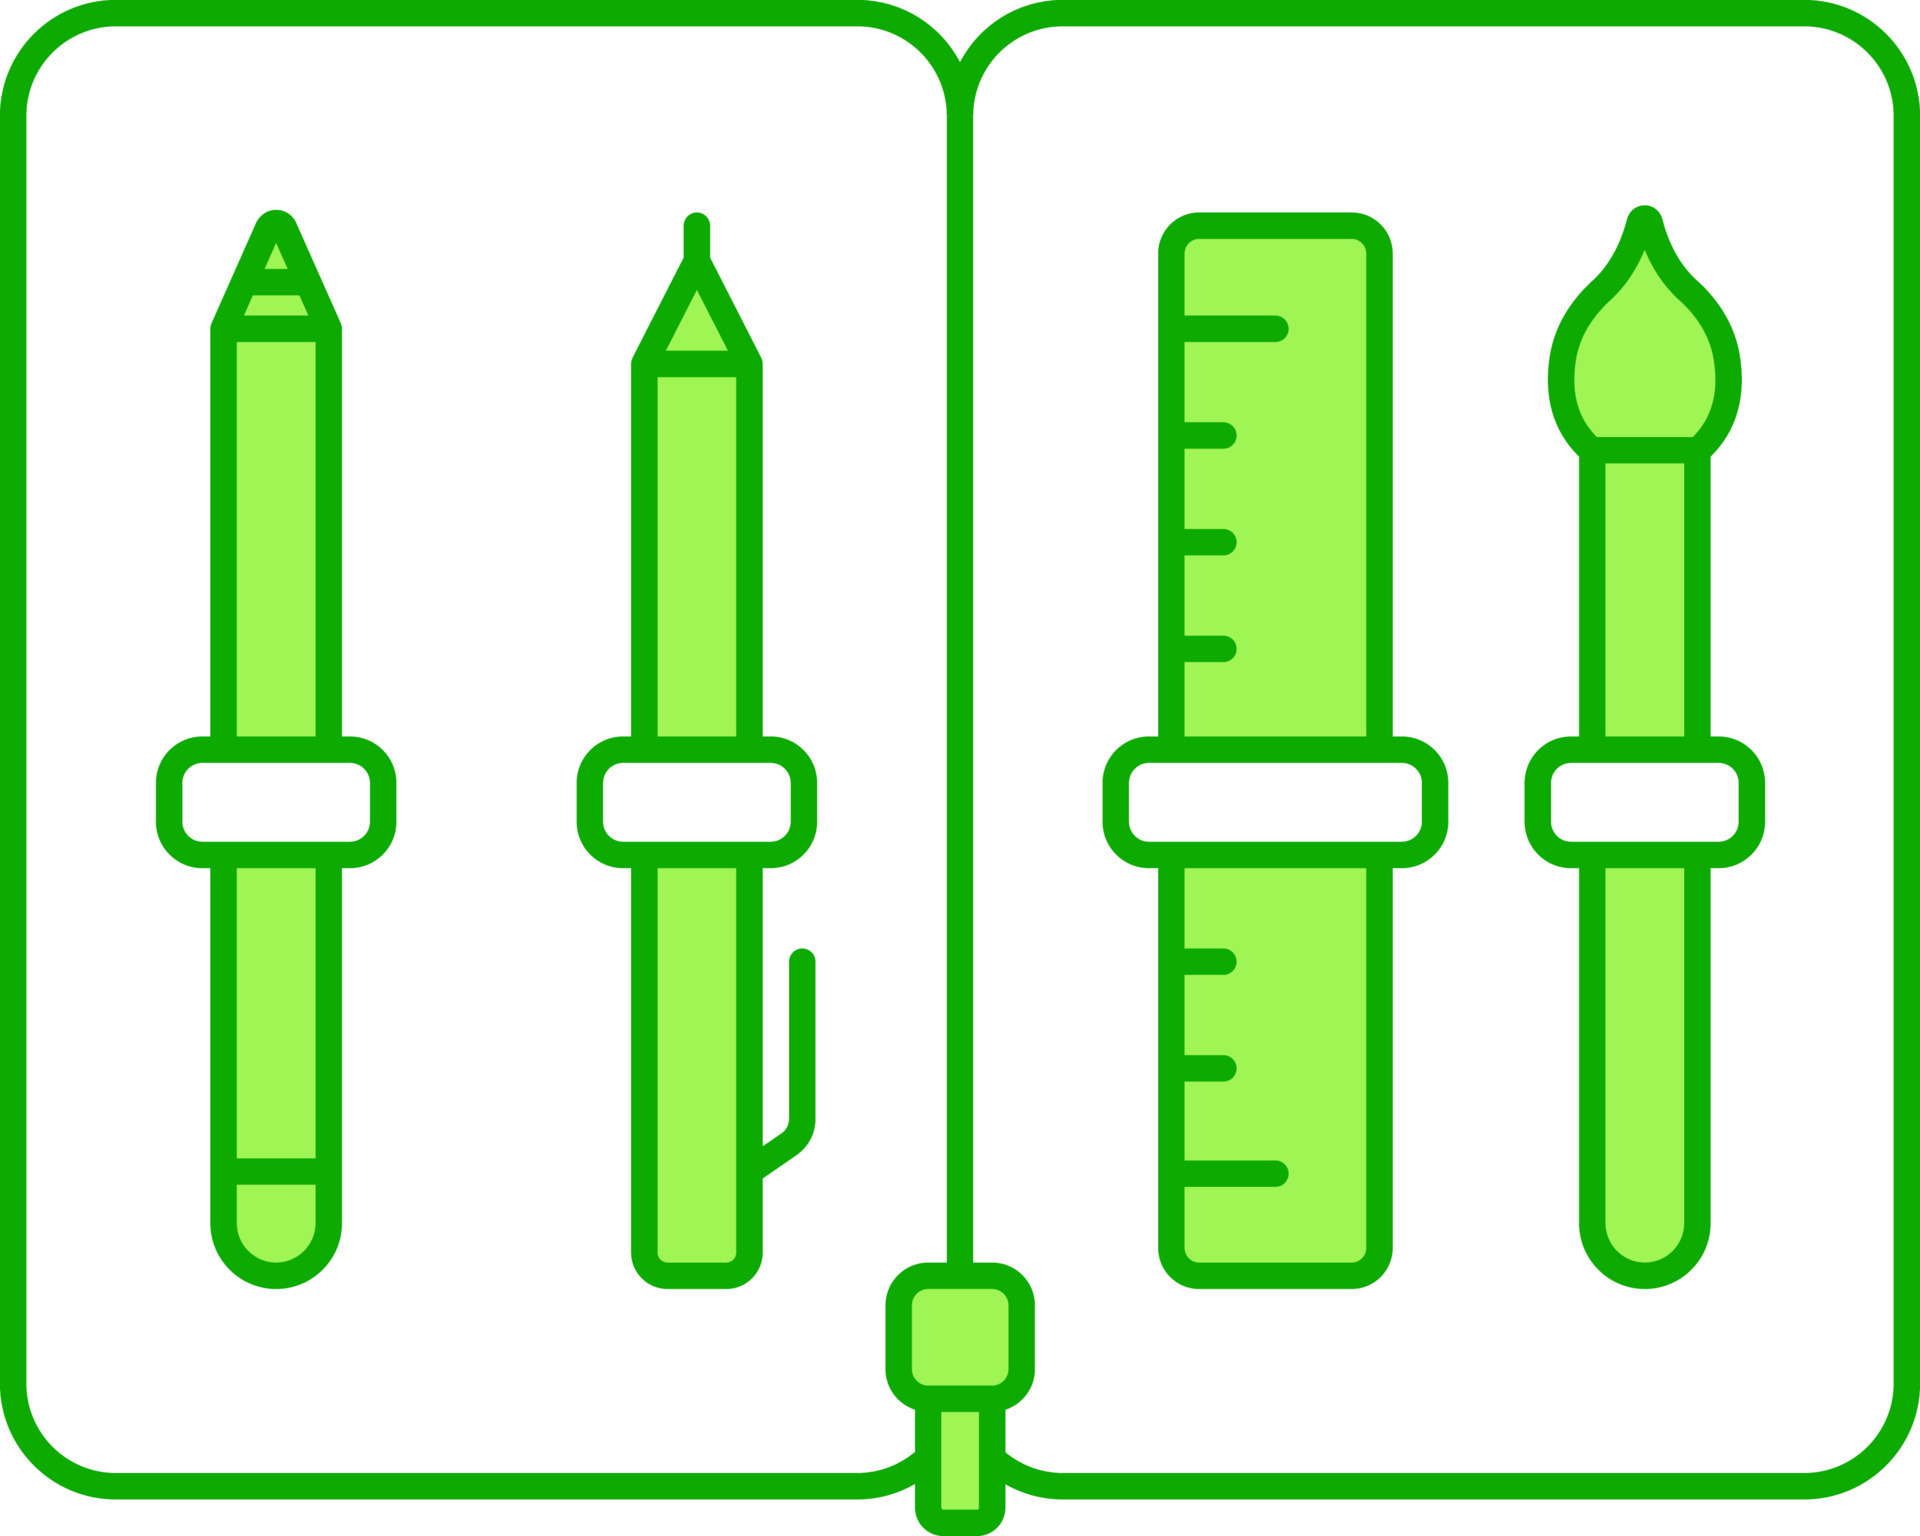 stylo, crayon, brosse avec règle échelle sac vert et blanc icône